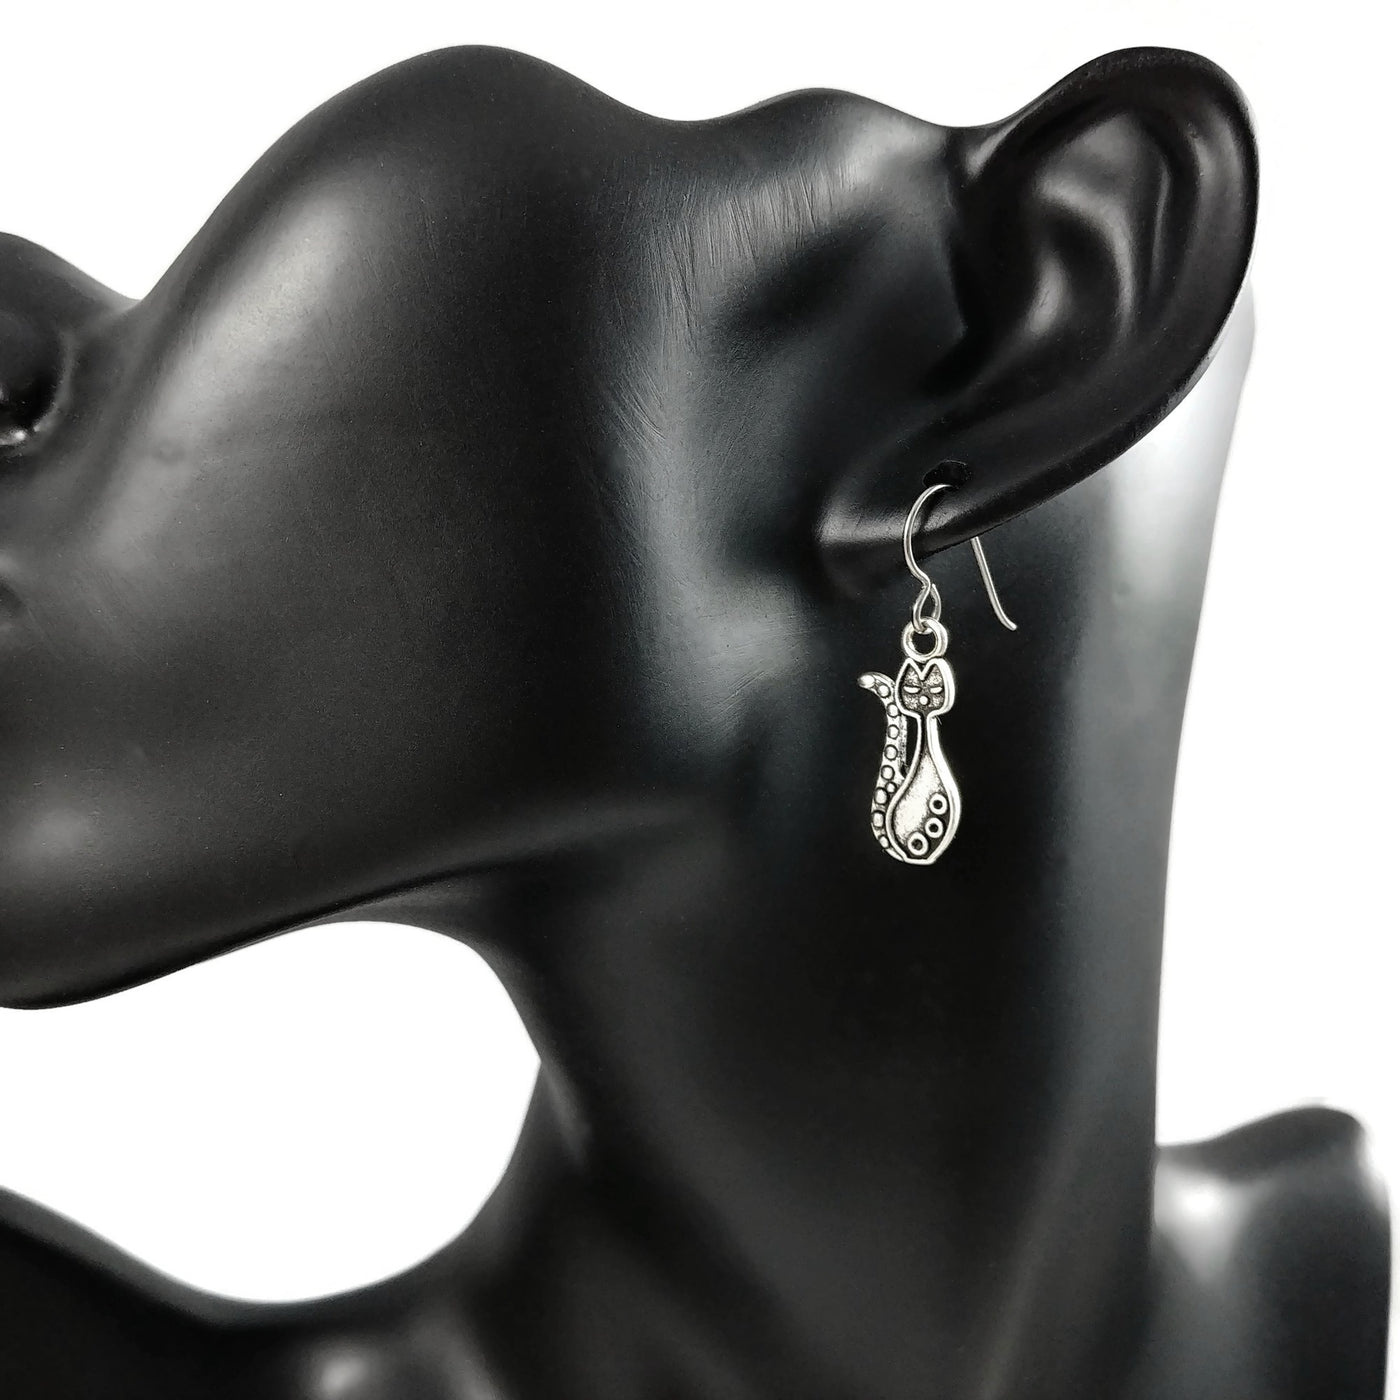 Silver cat rustic dangle earrings